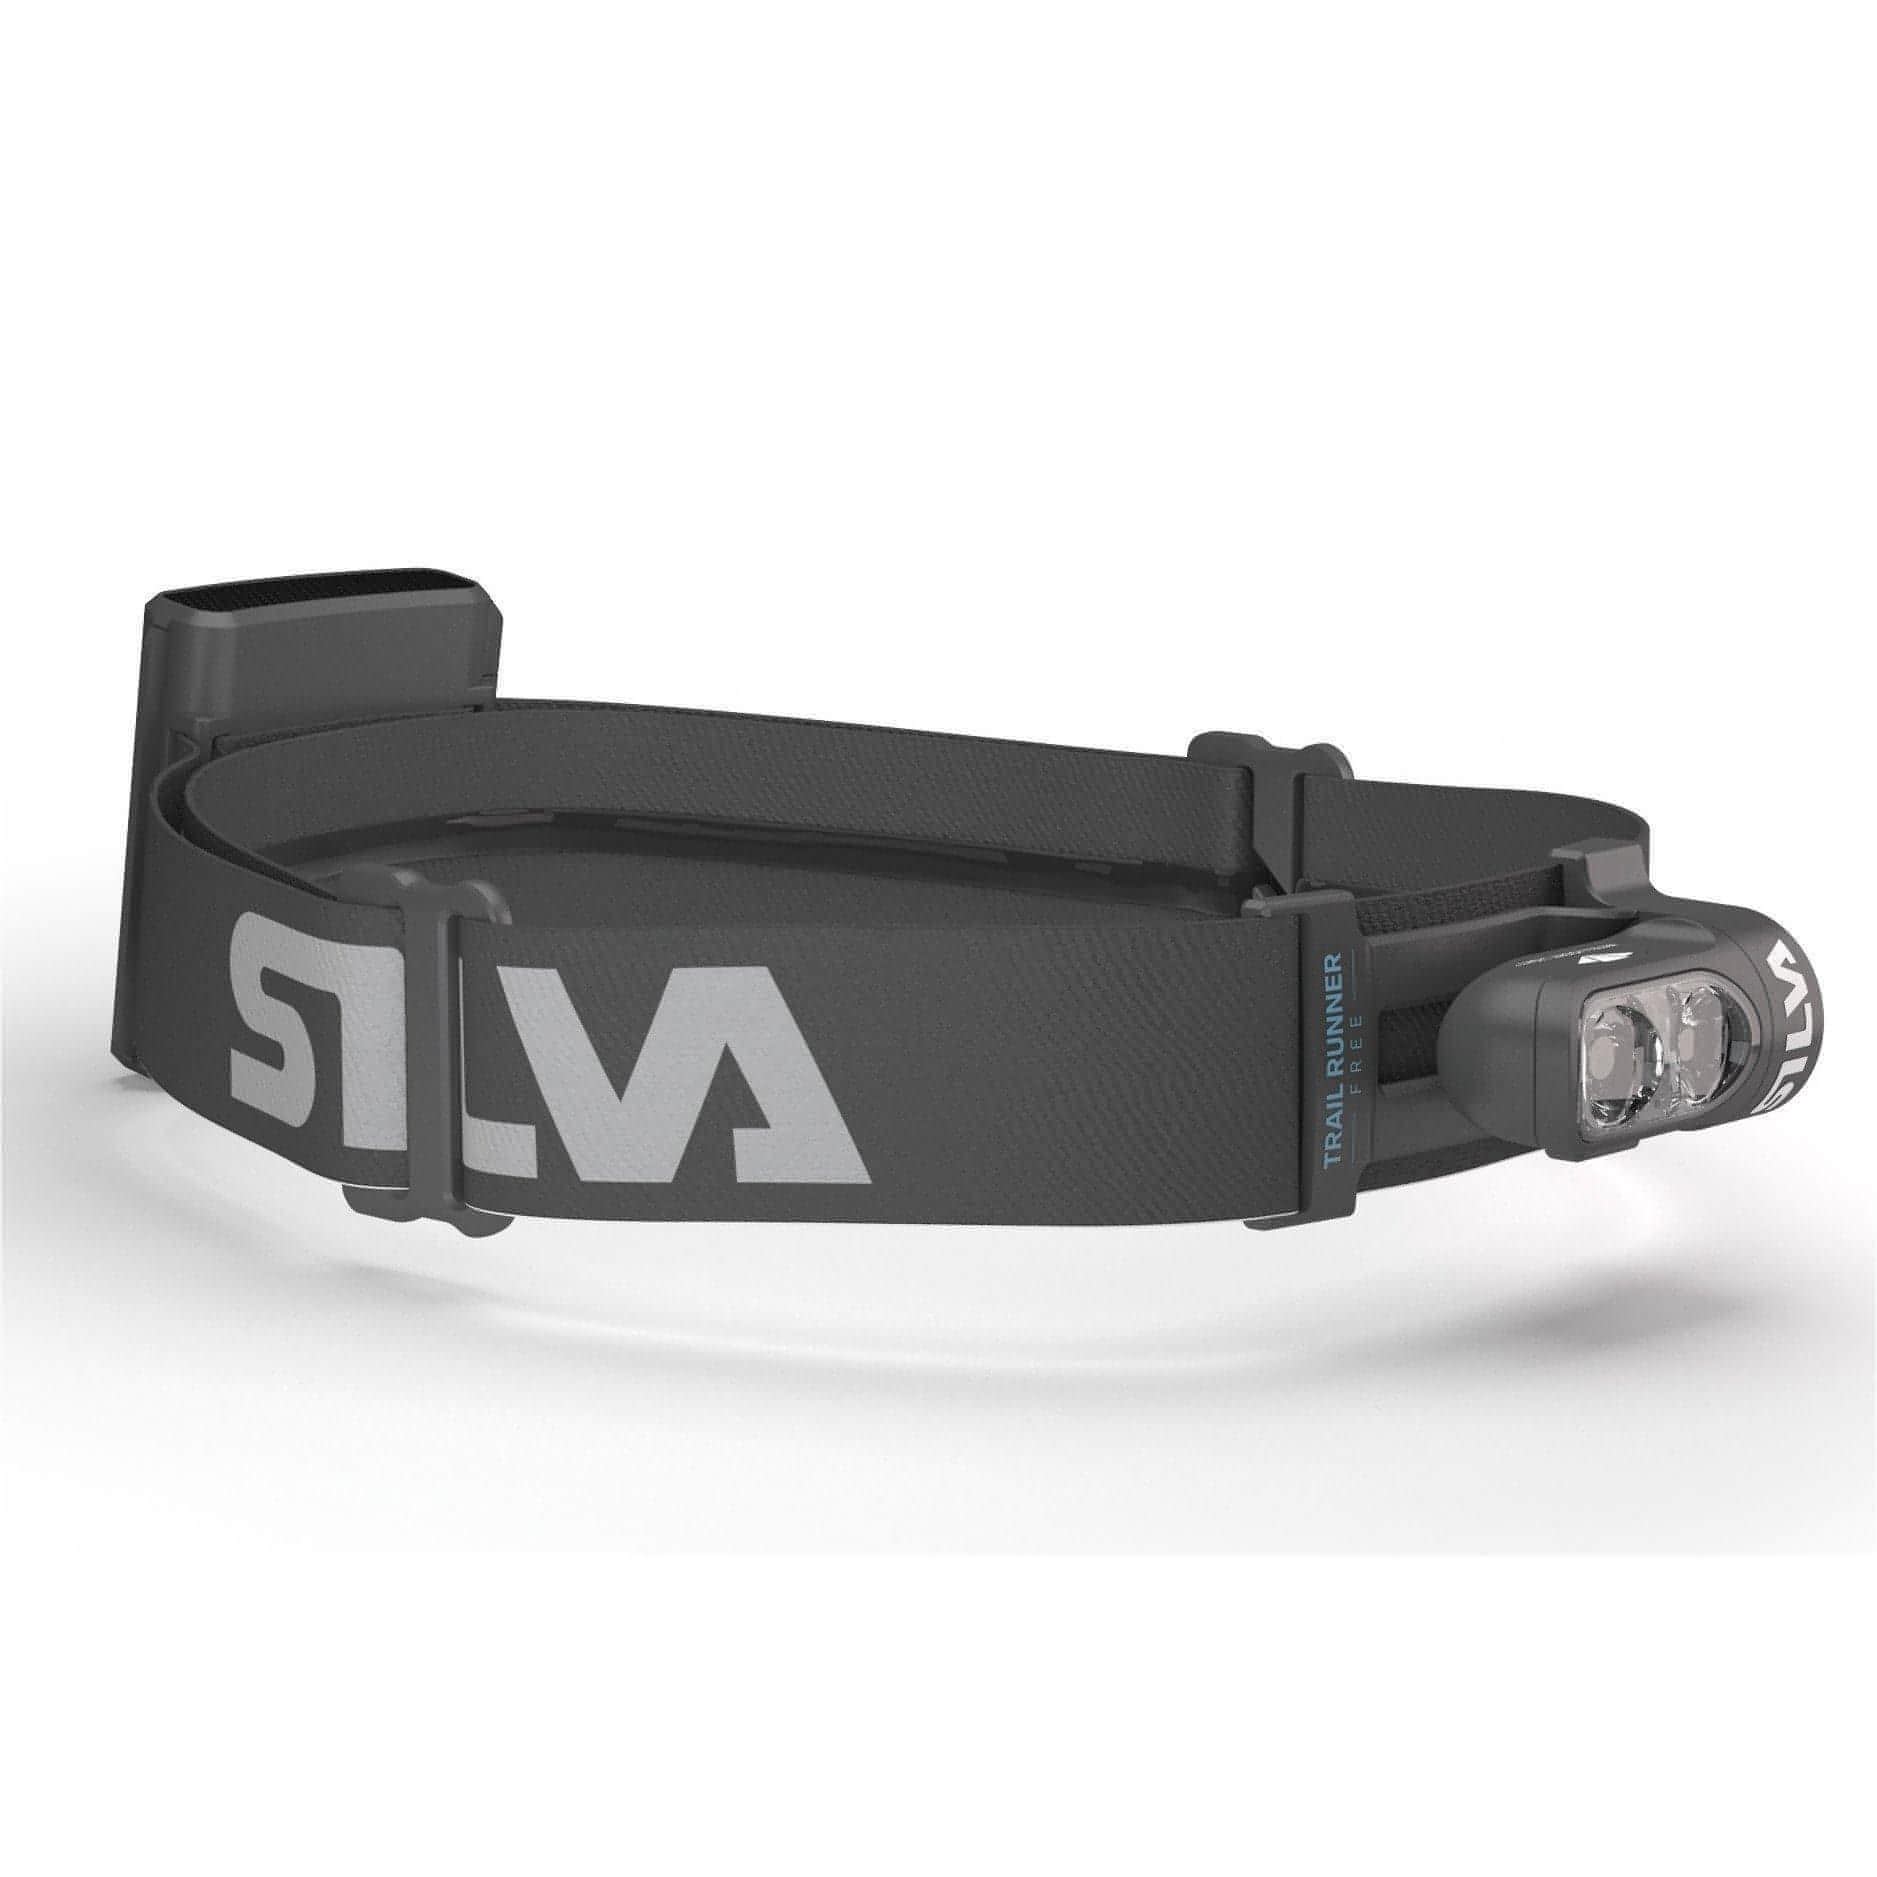 Silva Trail Runner Free Ultra Head Torch - Black 7318860200496 - Start Fitness